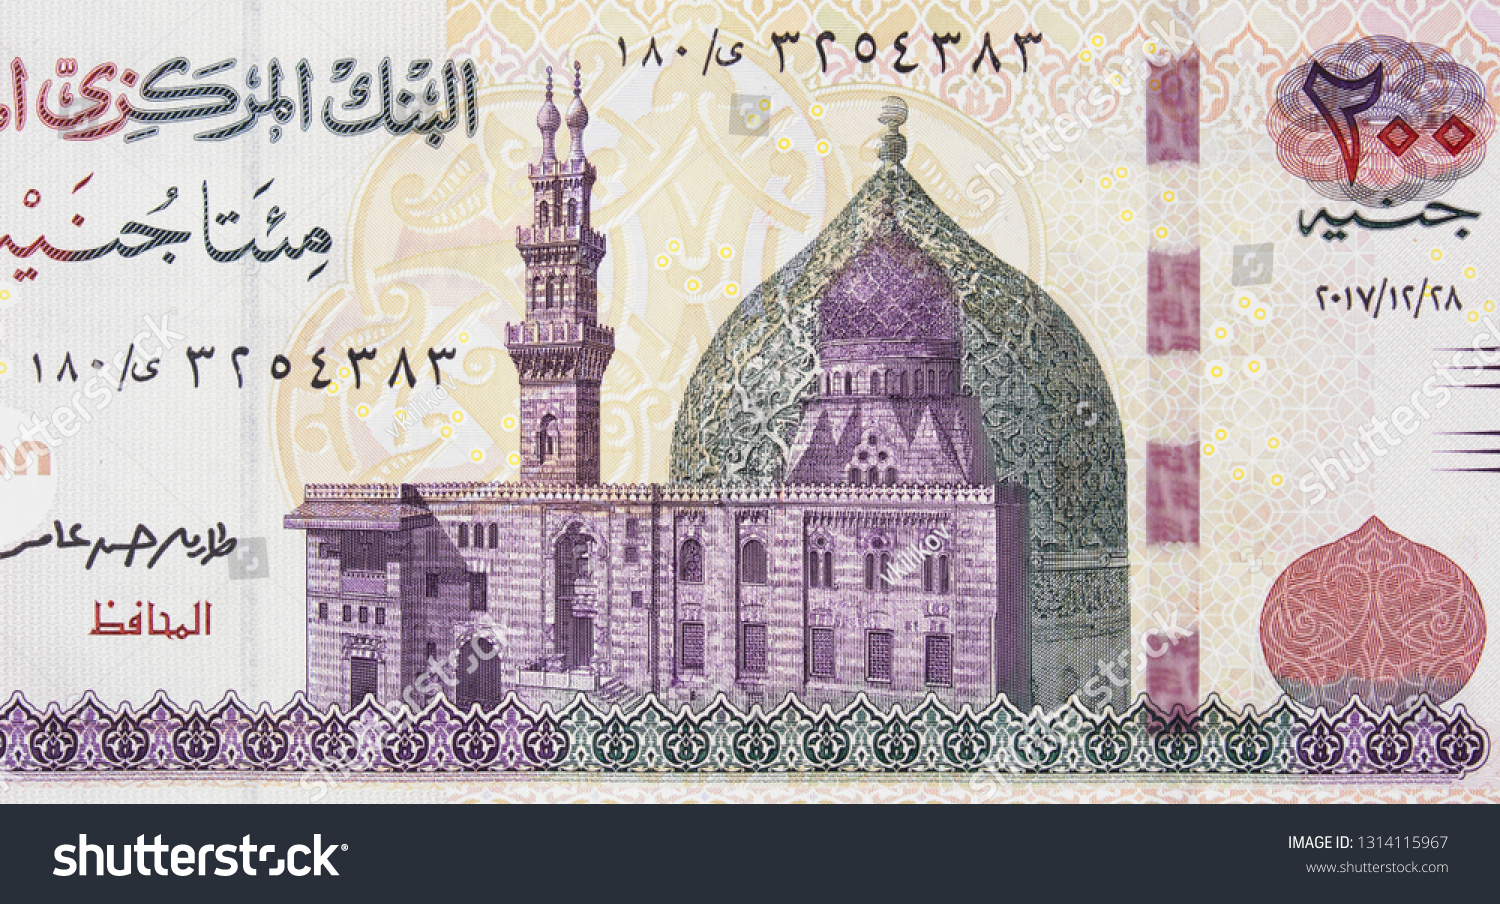 Egyptian 200 Pound Egypt Money Currency Stock Photo 1314115967 Shutterstock...